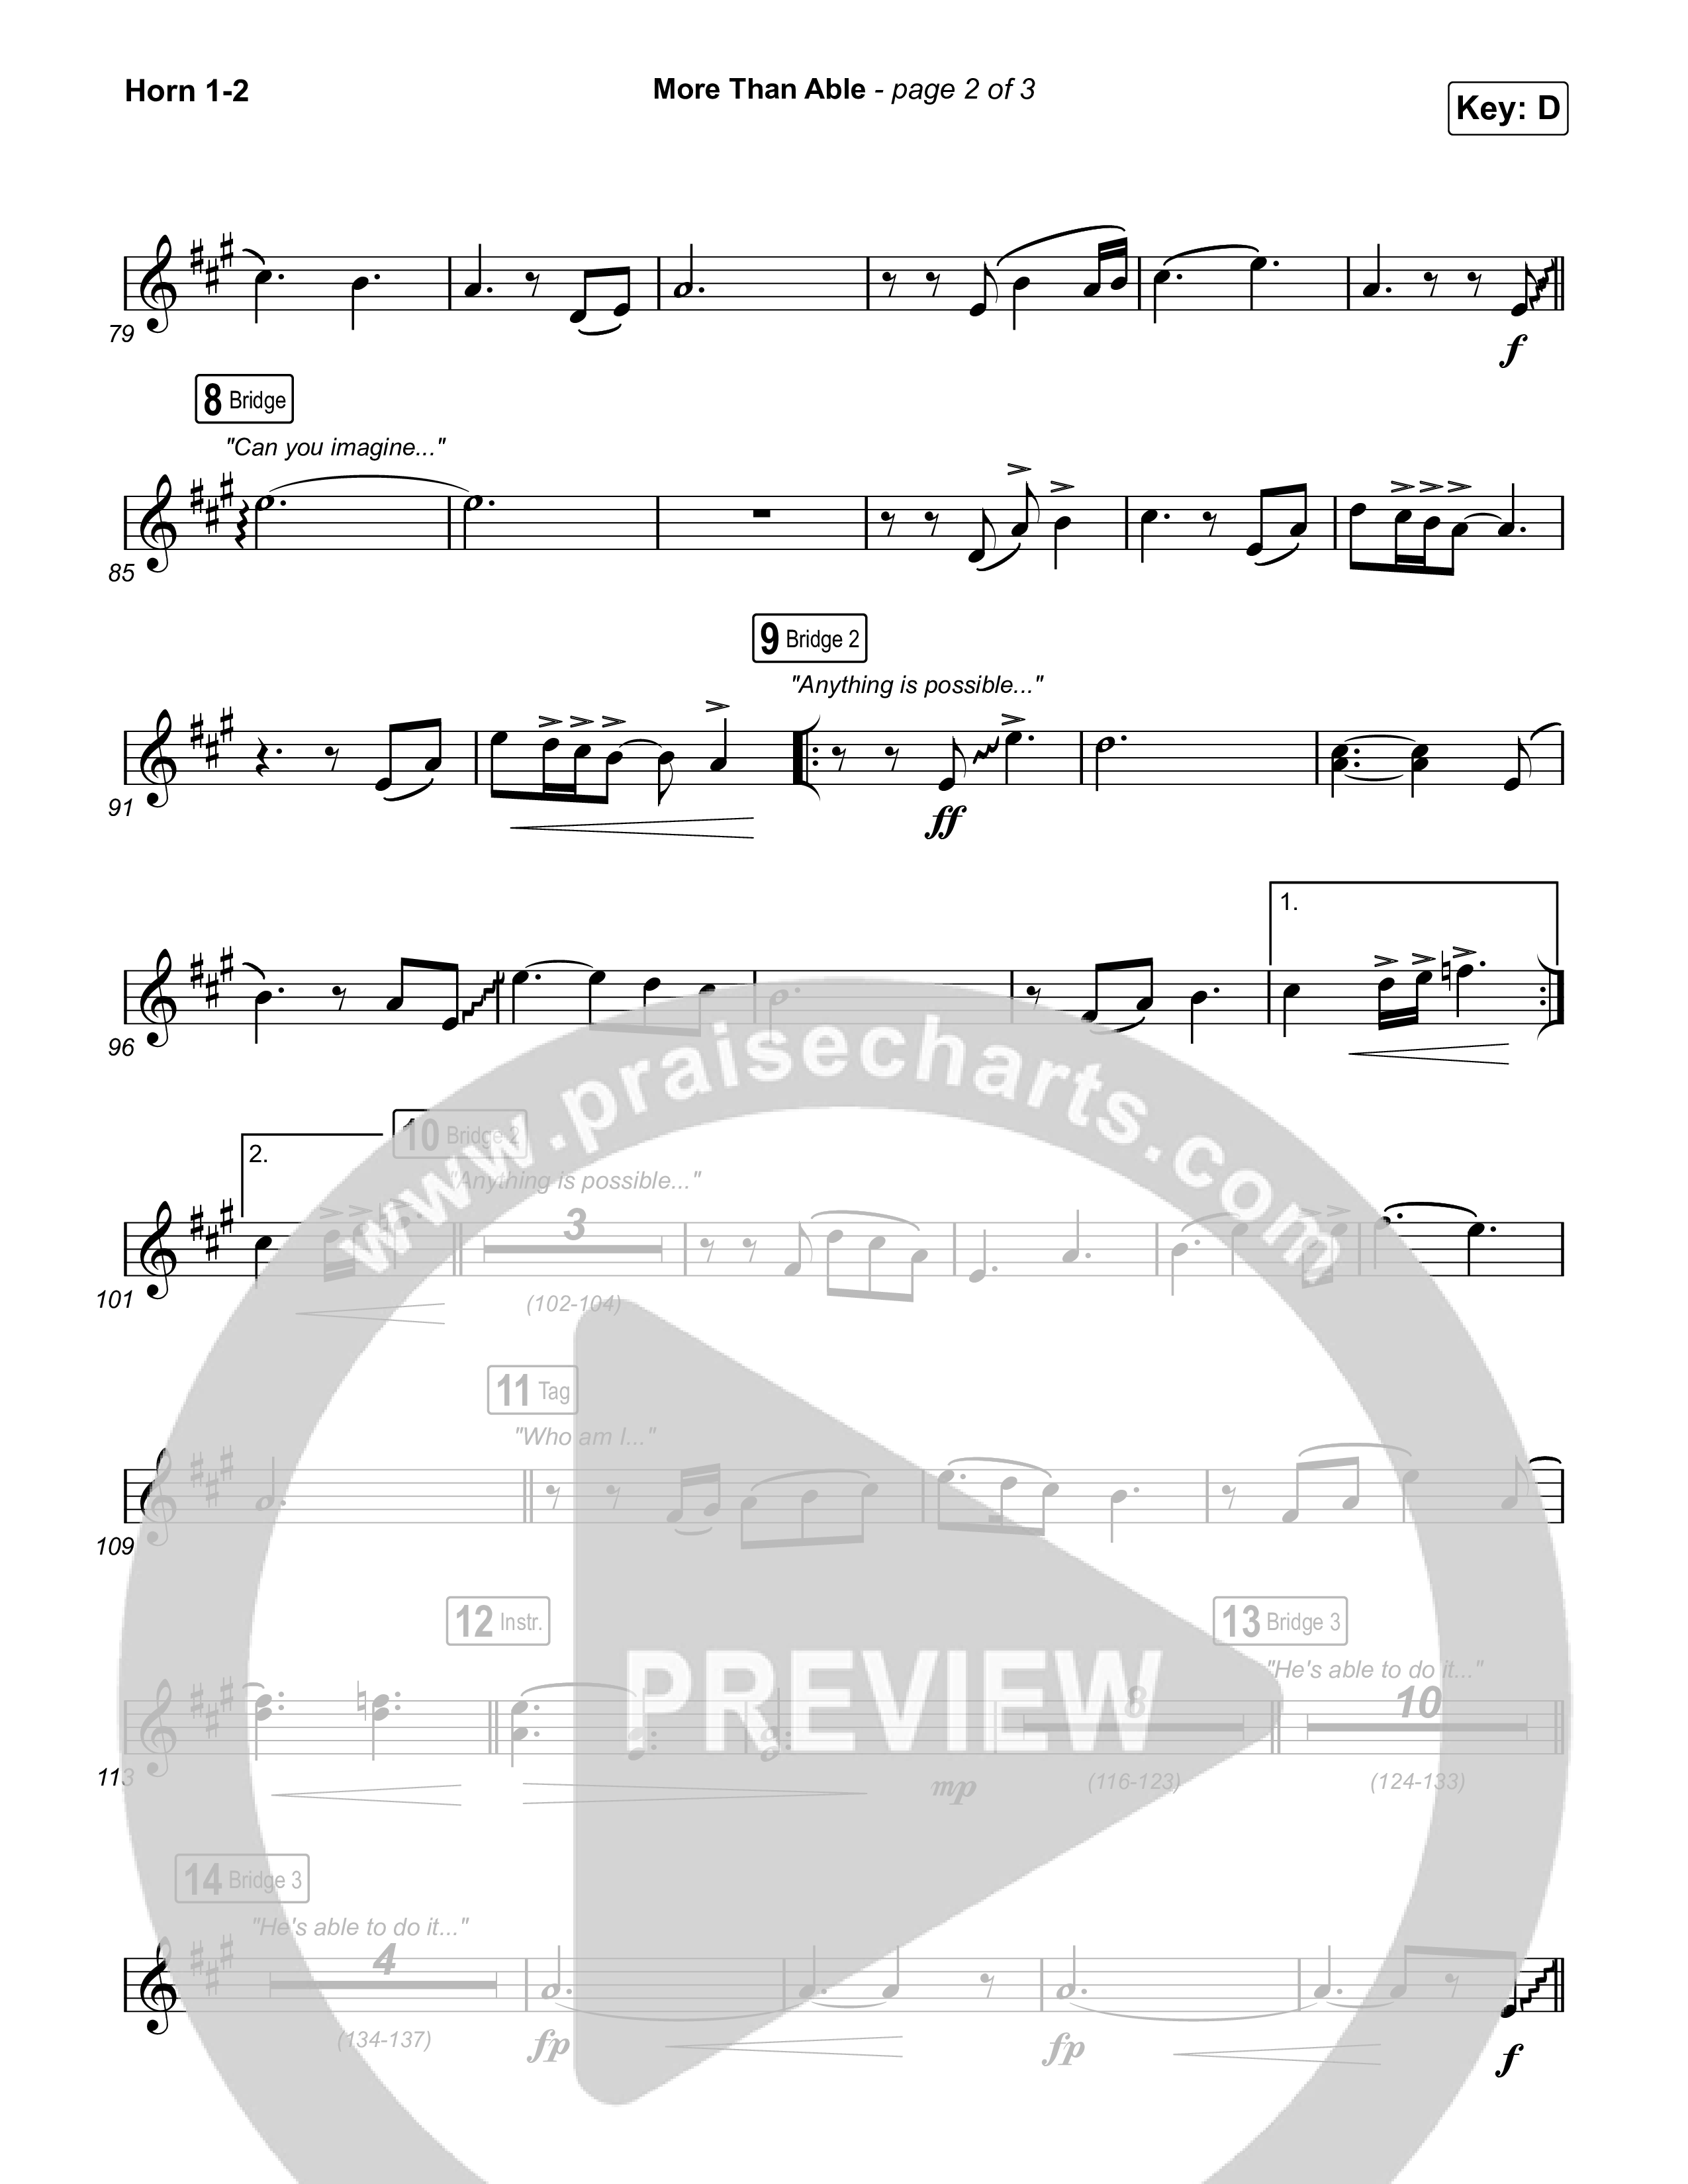 More Than Able French Horn 1,2 (Maverick City Music / Tasha Cobbs Leonard)